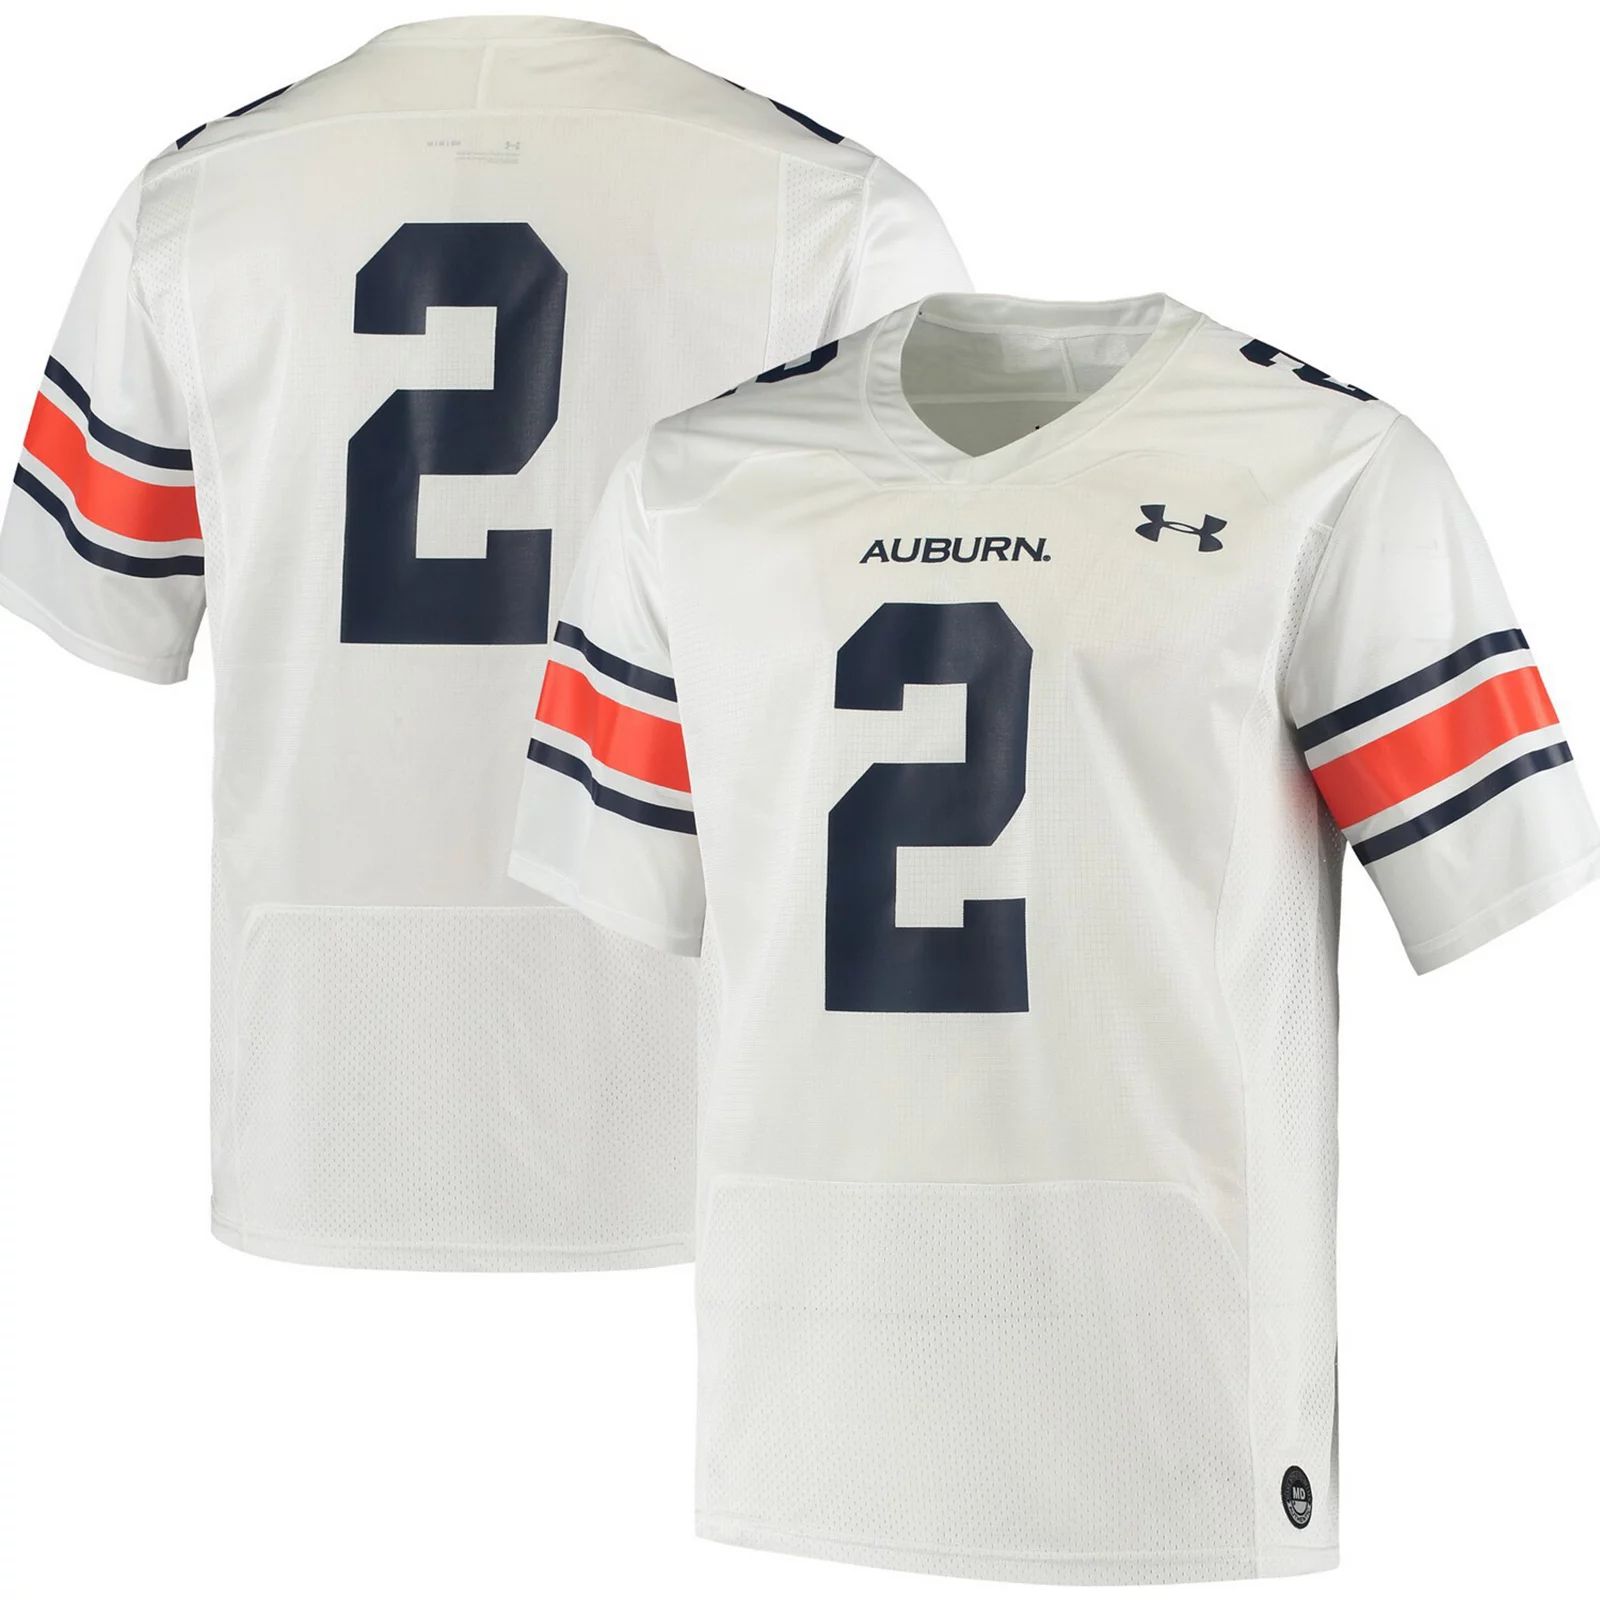 Men's Under Armour #2 White Auburn Tigers Logo Replica Football Jersey, Size: 3XL | Kohl's